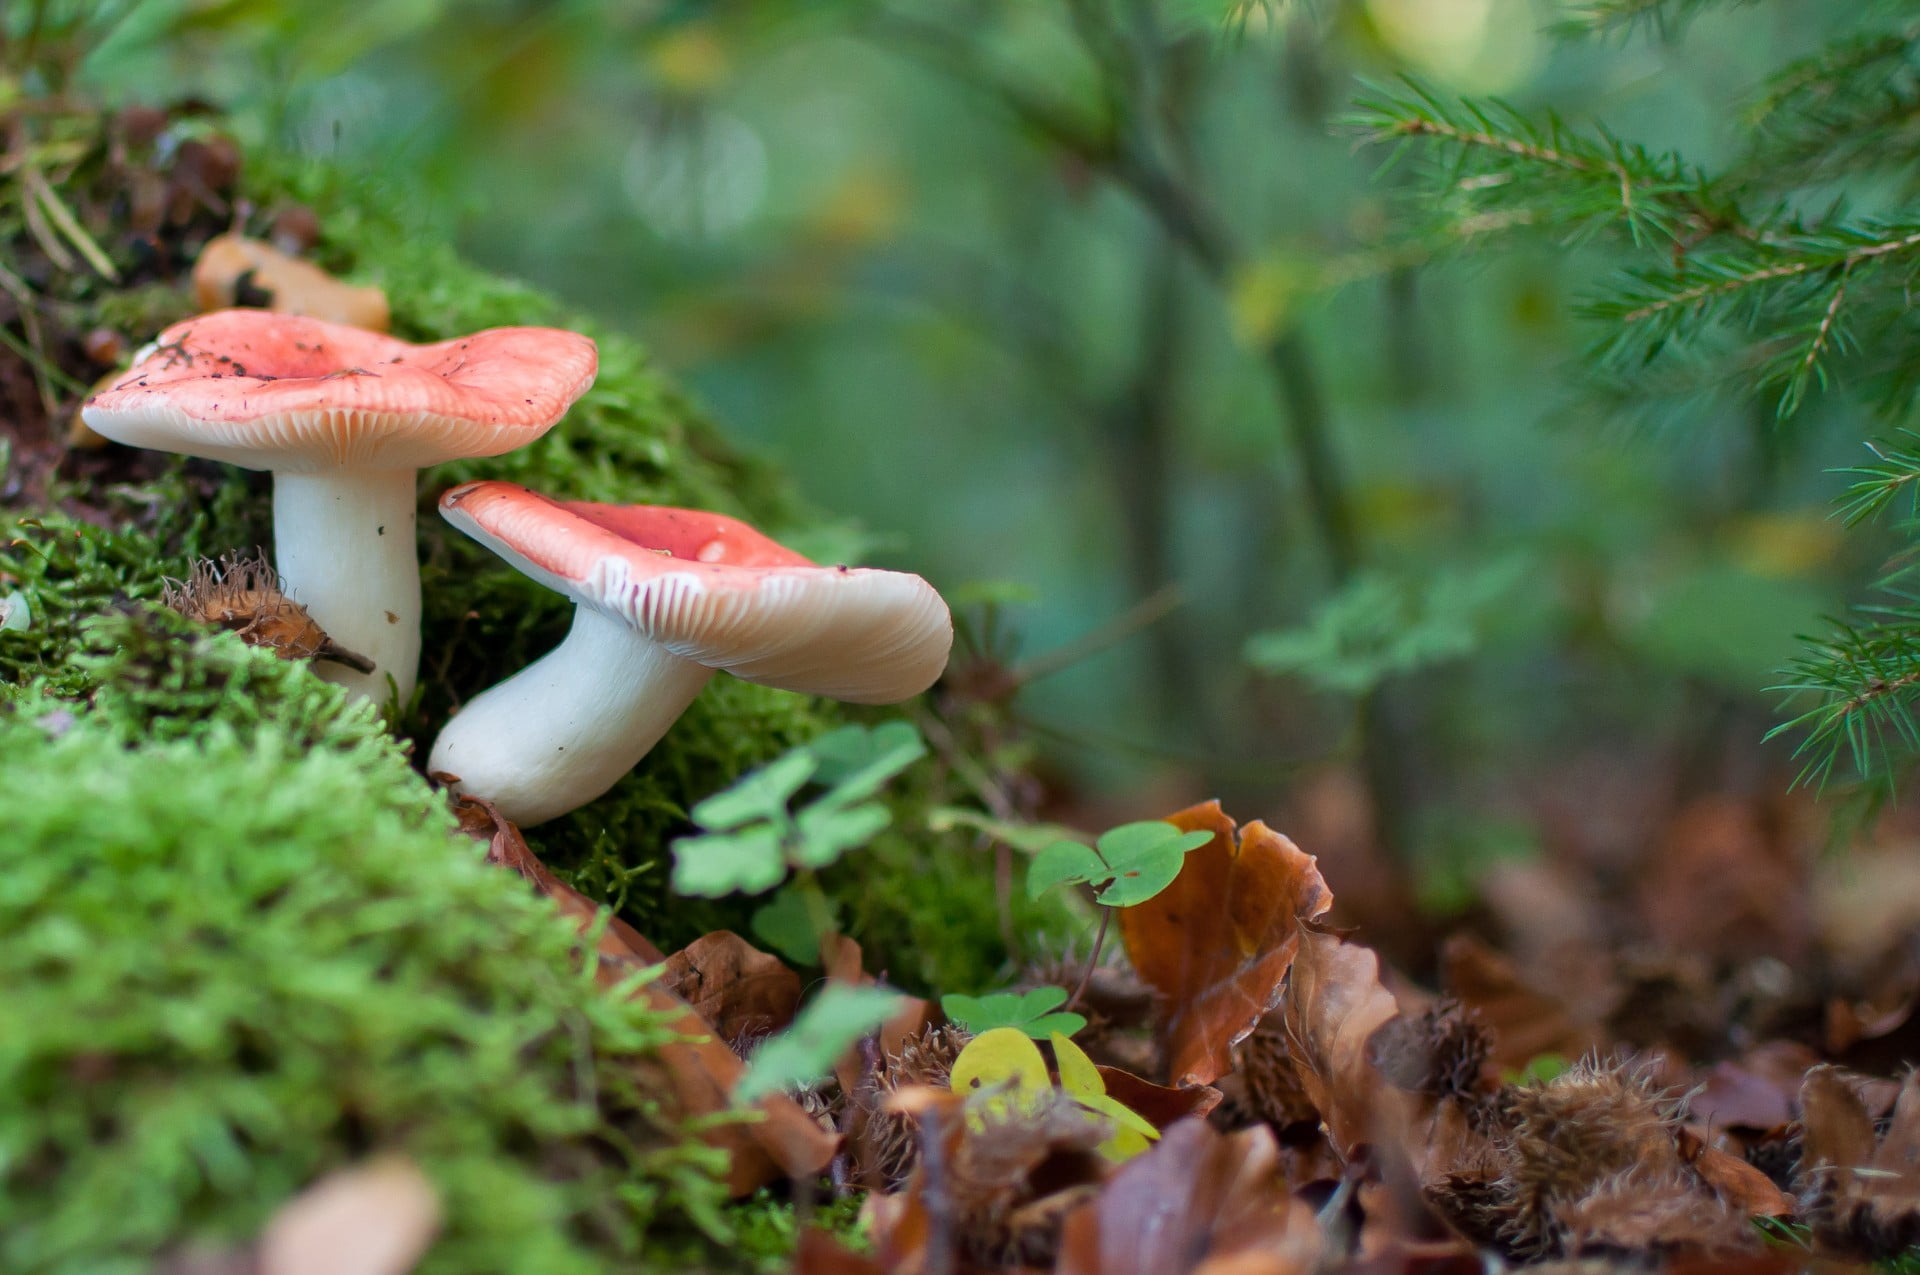 Mushroom Photography